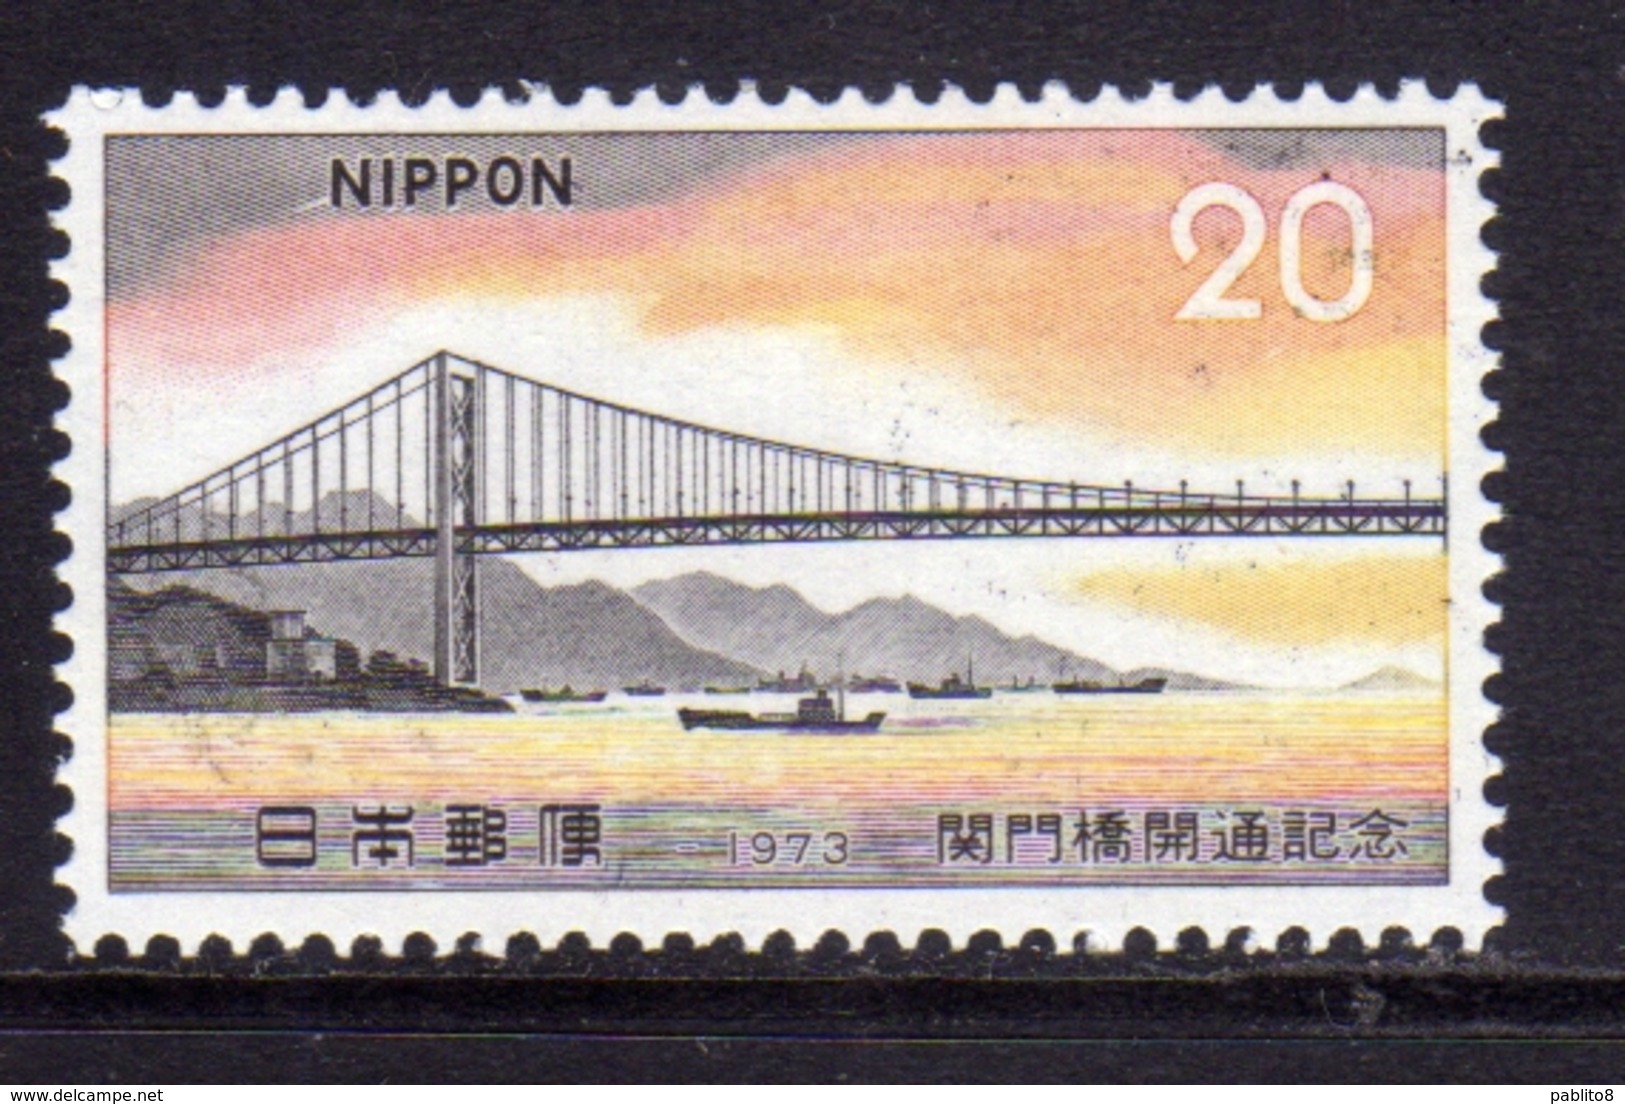 JAPAN NIPPON GIAPPONE JAPON 1973 KAN MON BRIDGE 20y  MNH - Nuovi